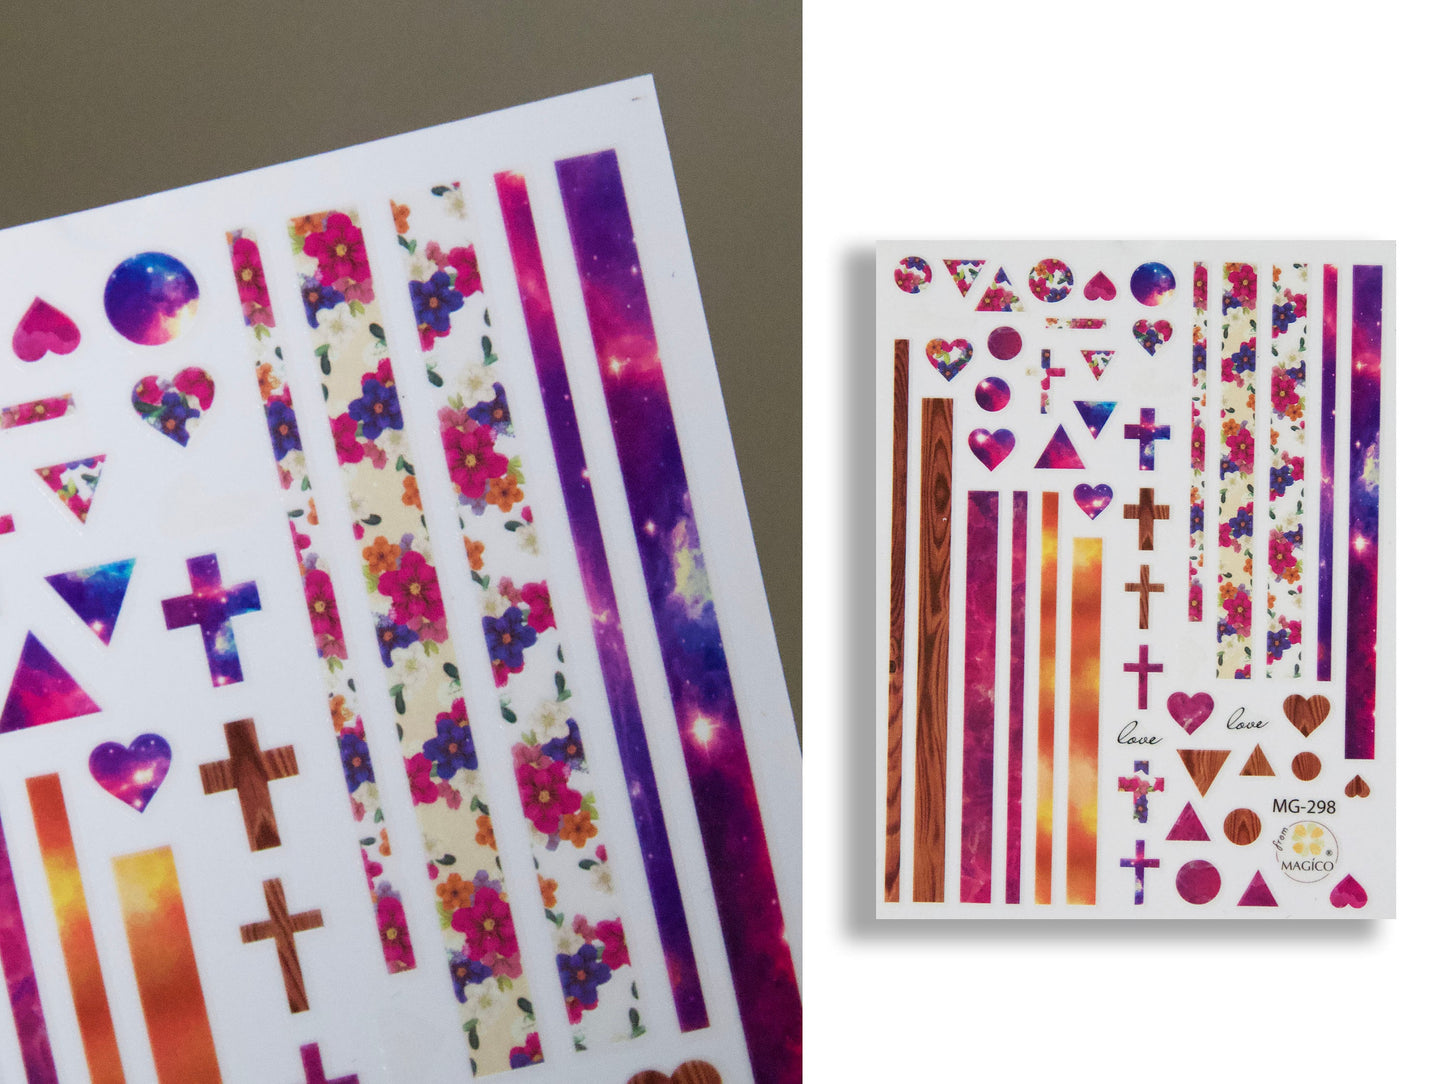 Totem Pinky gradient nail sticker/Star Moon Unicorn 1 Sheet 3D Nail Art Stickers Self Adhesive Decals